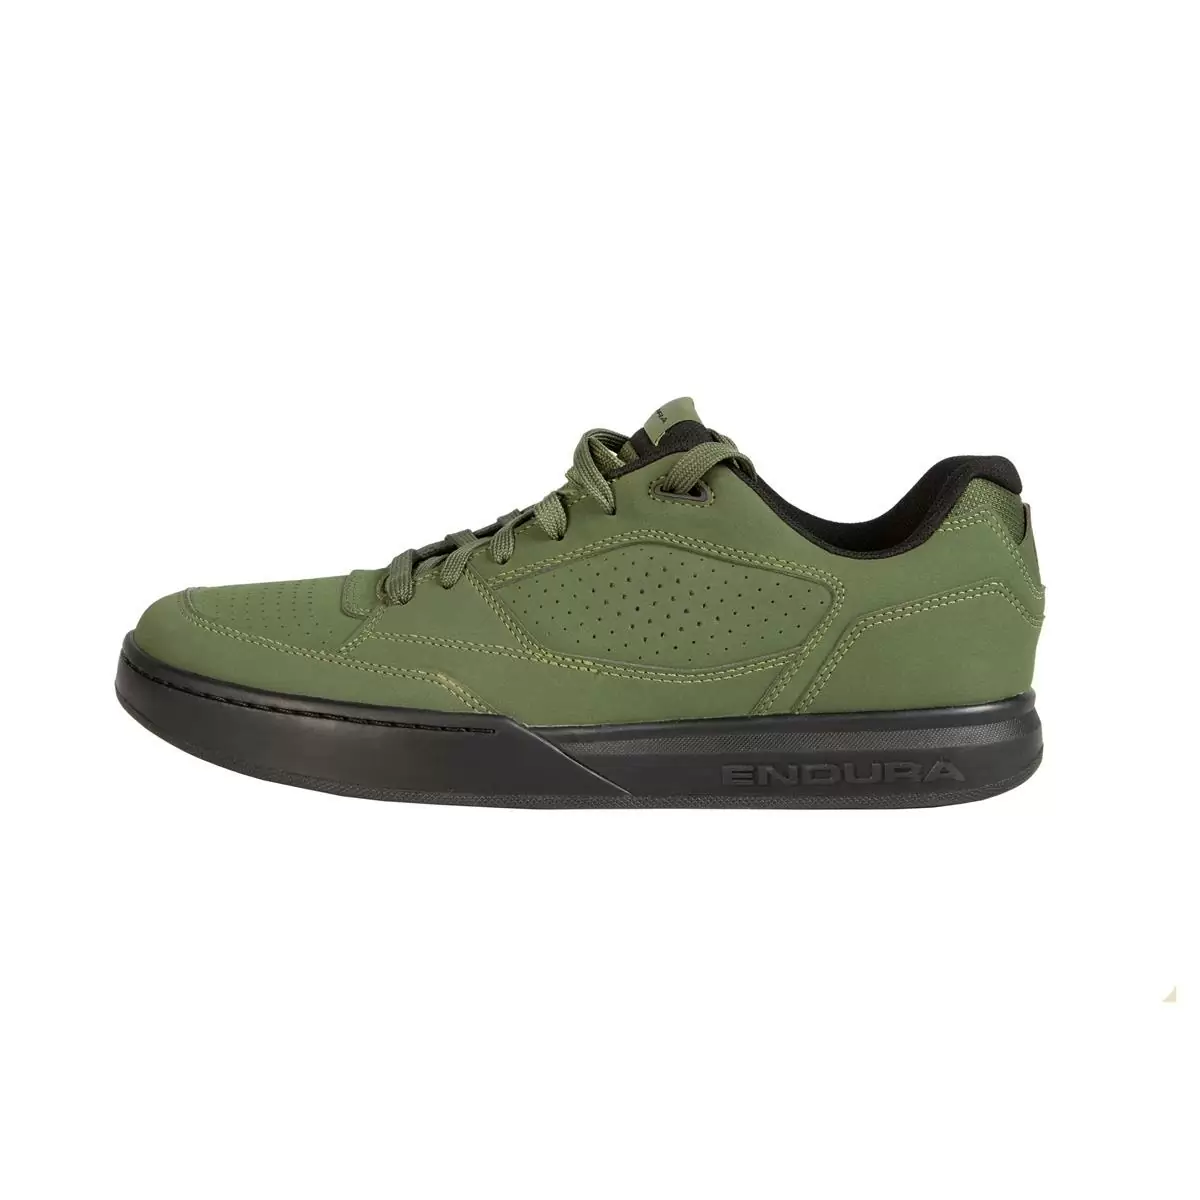 Hummvee Flat Pedal Schuhe Grün Größe 38 #1